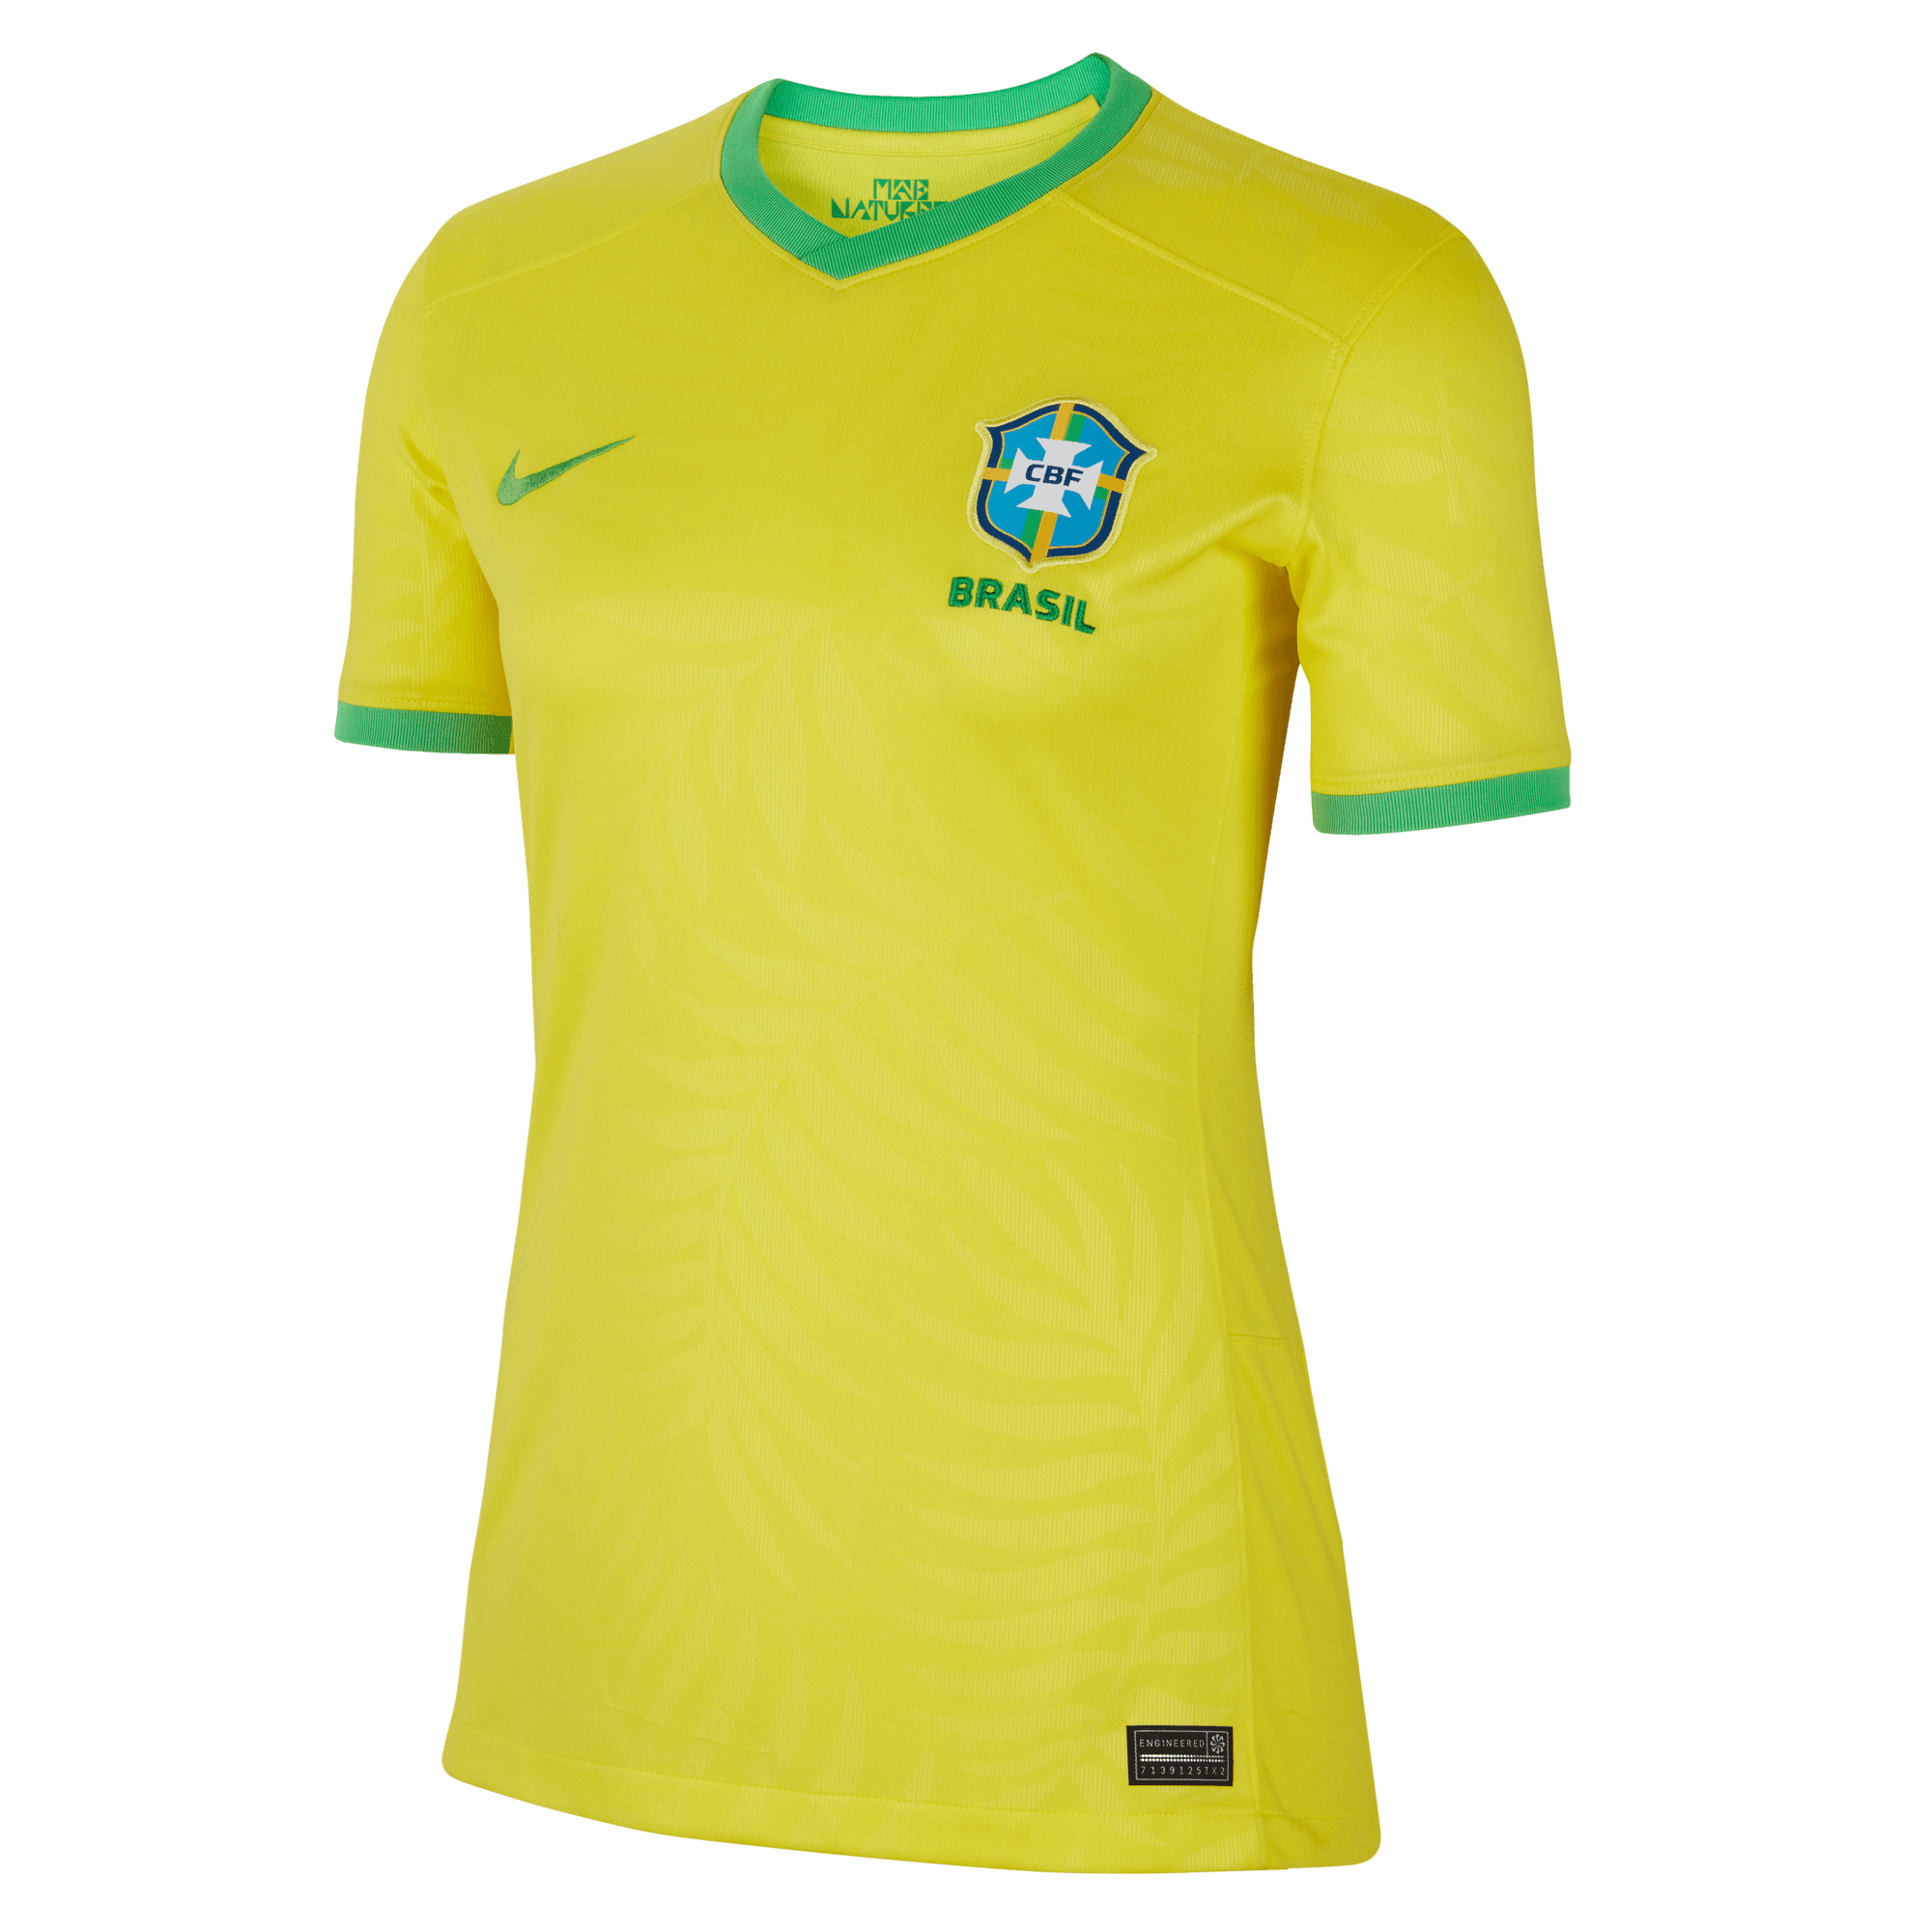 2020/21 Tottenham Home Football Shirt / Old Nike Soccer Jersey